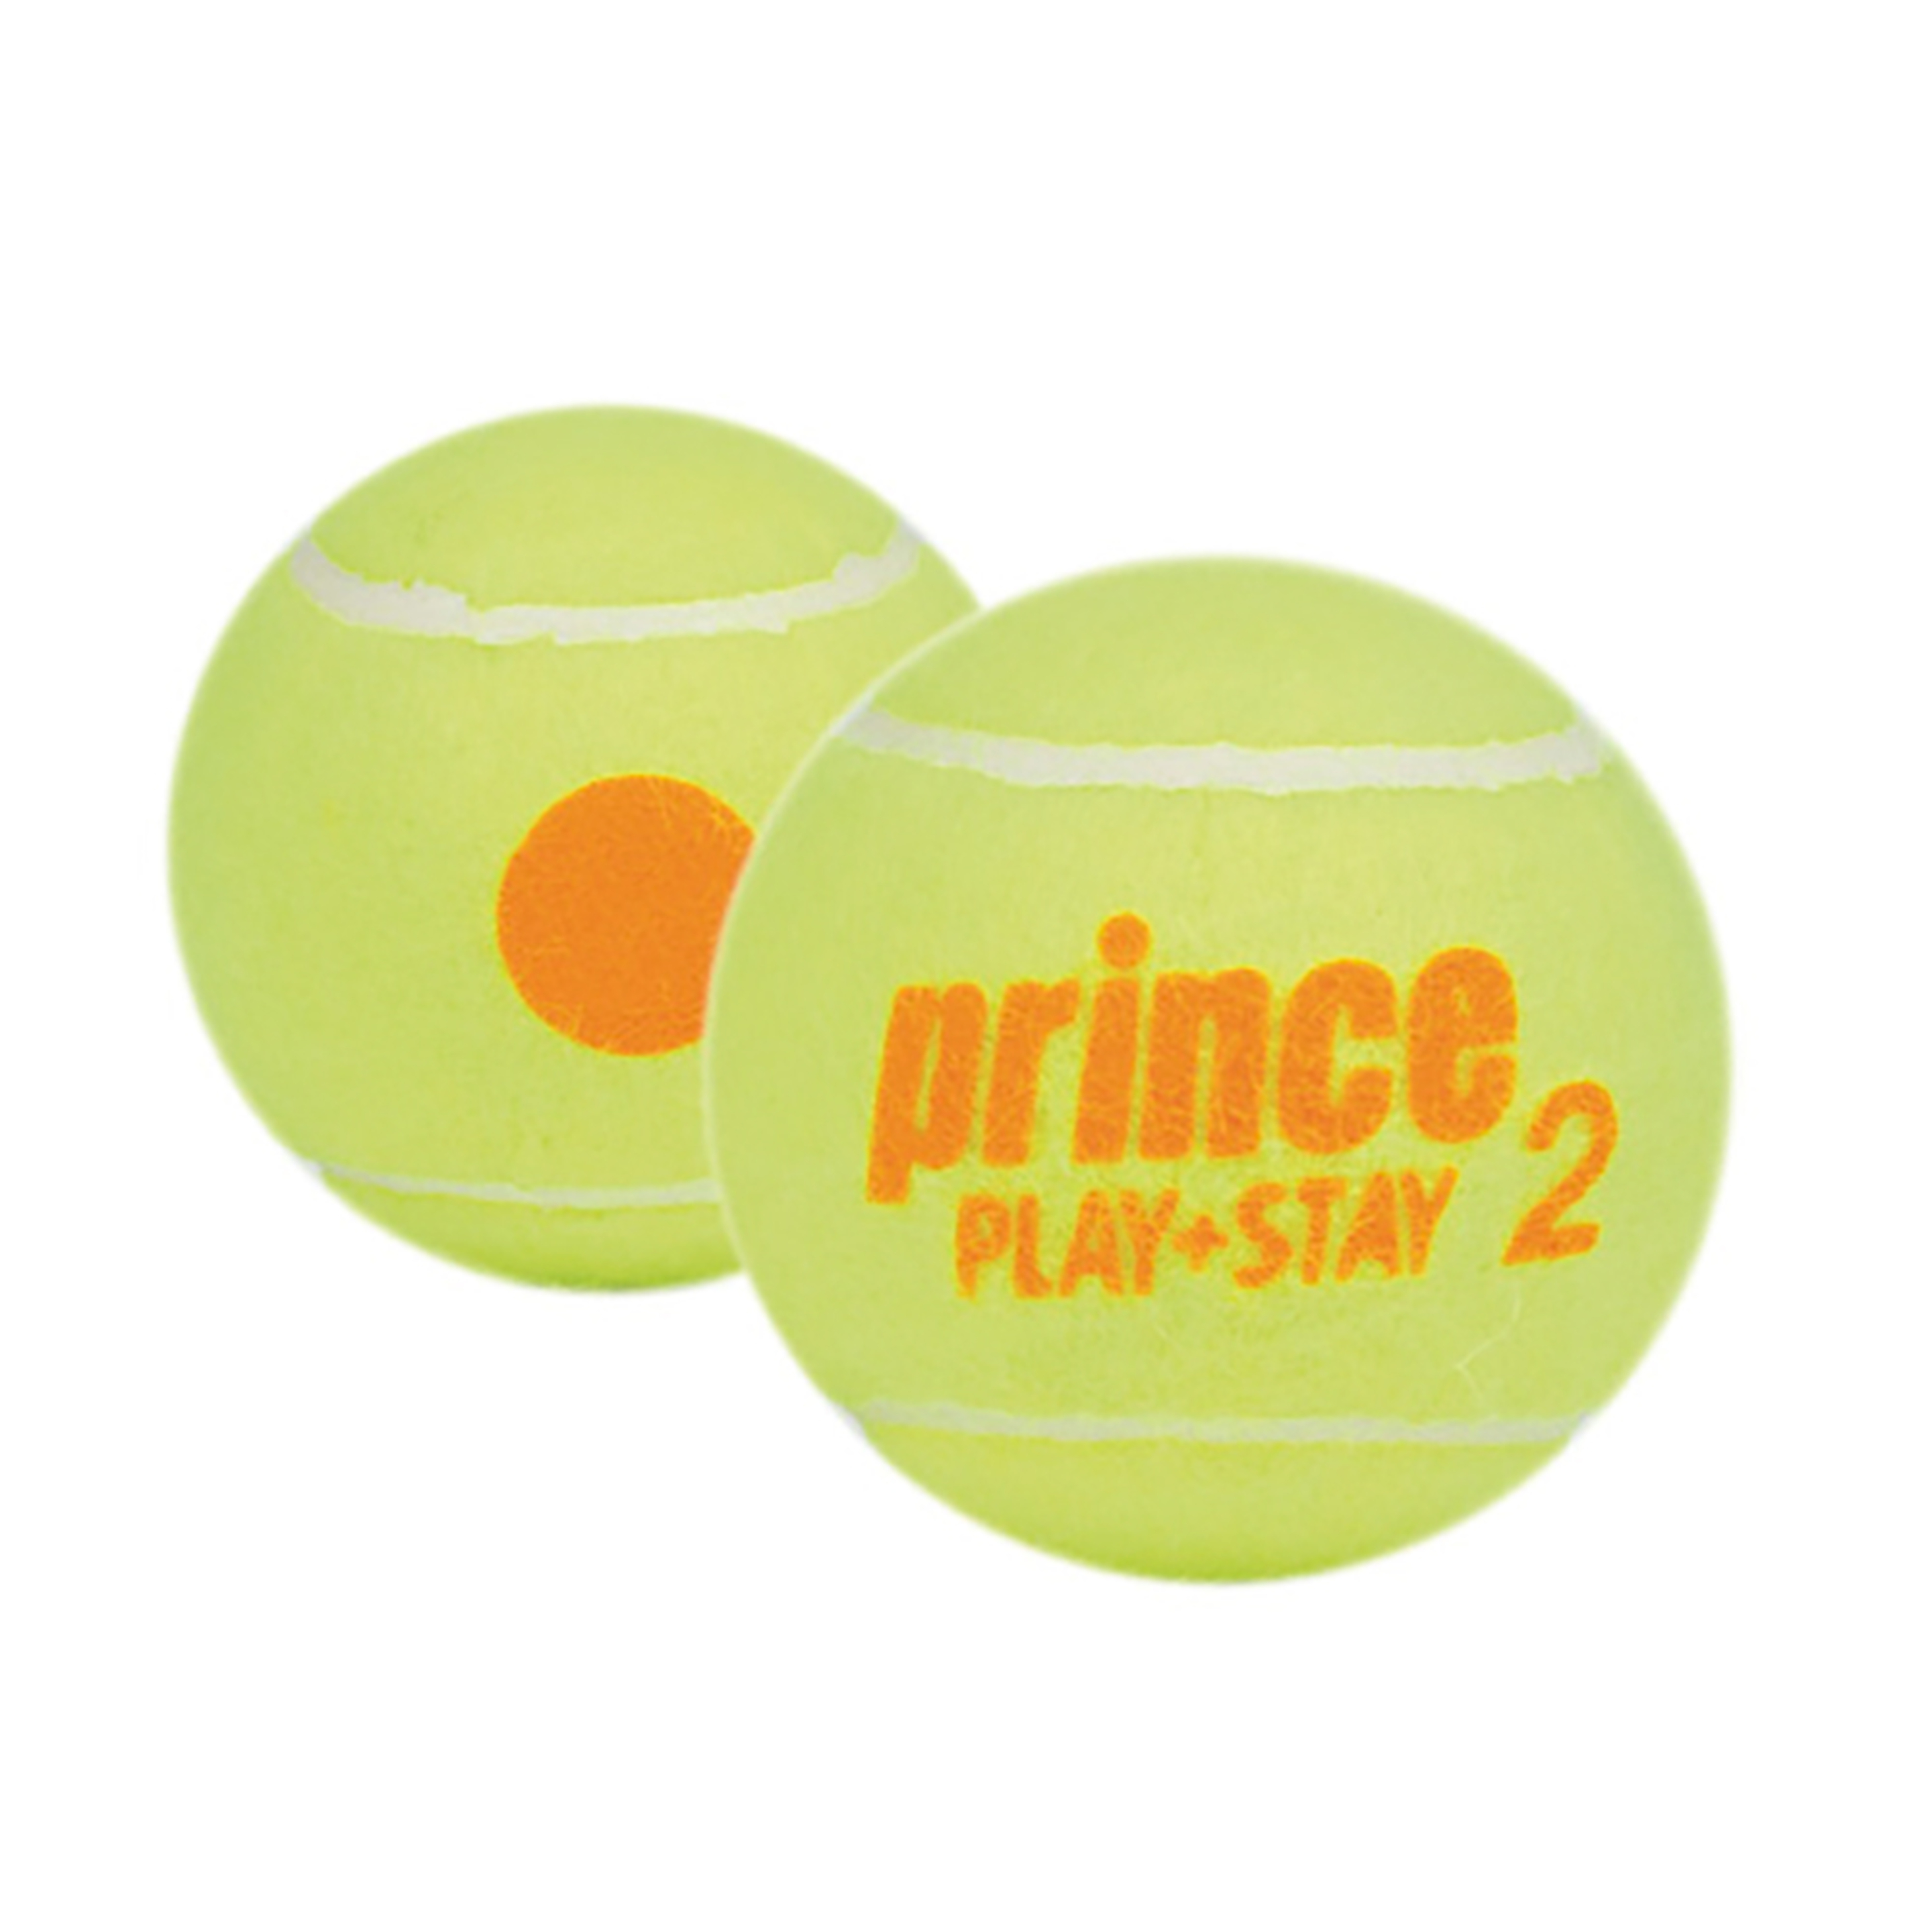 Bolsa De 72 Bolas De Tenis Prince Play & Stay Stage 2